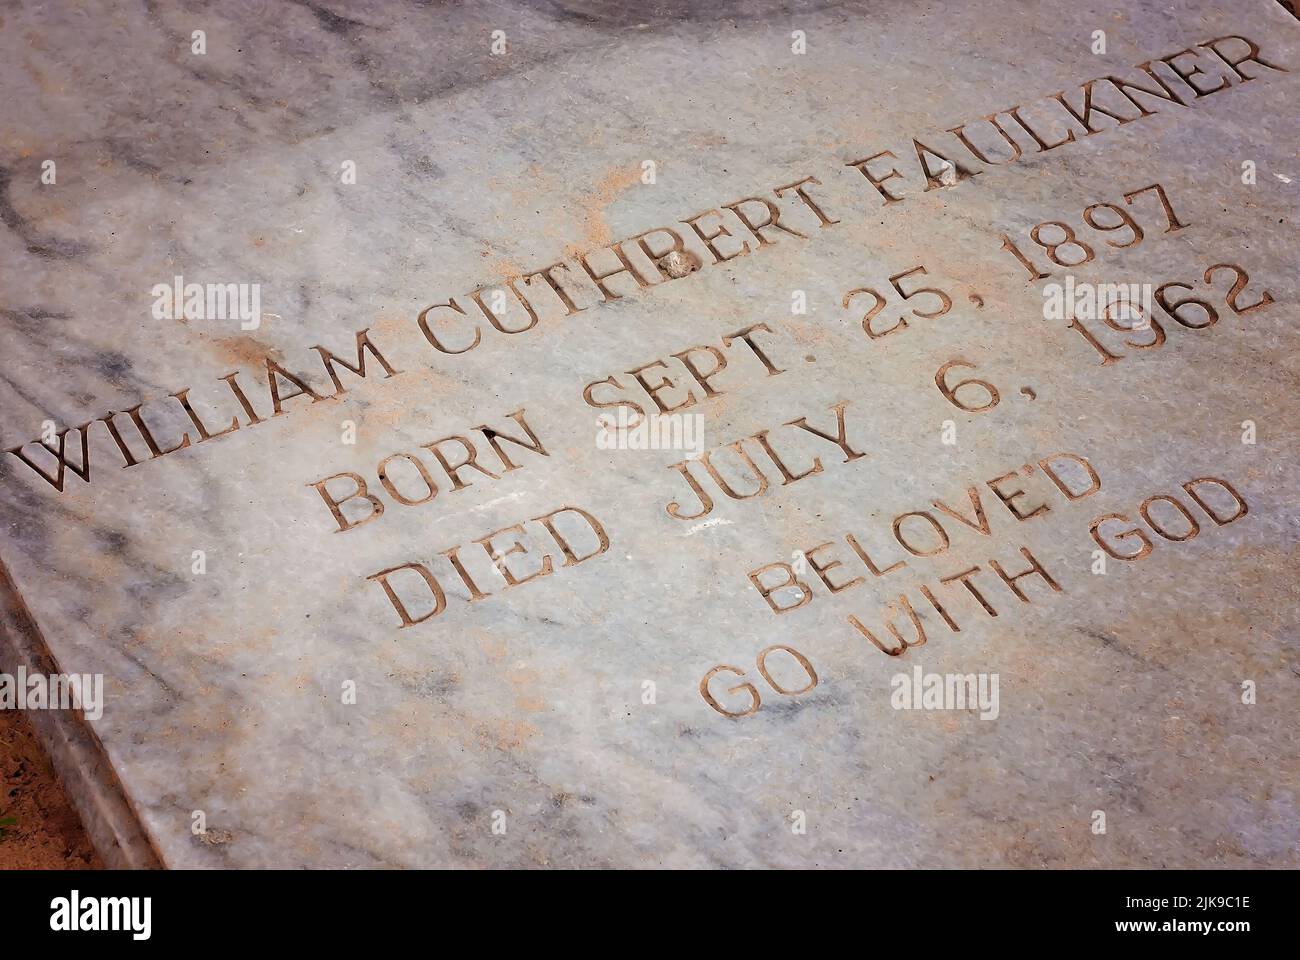 La tumba de William Faulkner se muestra el 17 de julio de 2011 en Oxford, Mississippi. Faulkner es un famoso autor sureño. Foto de stock